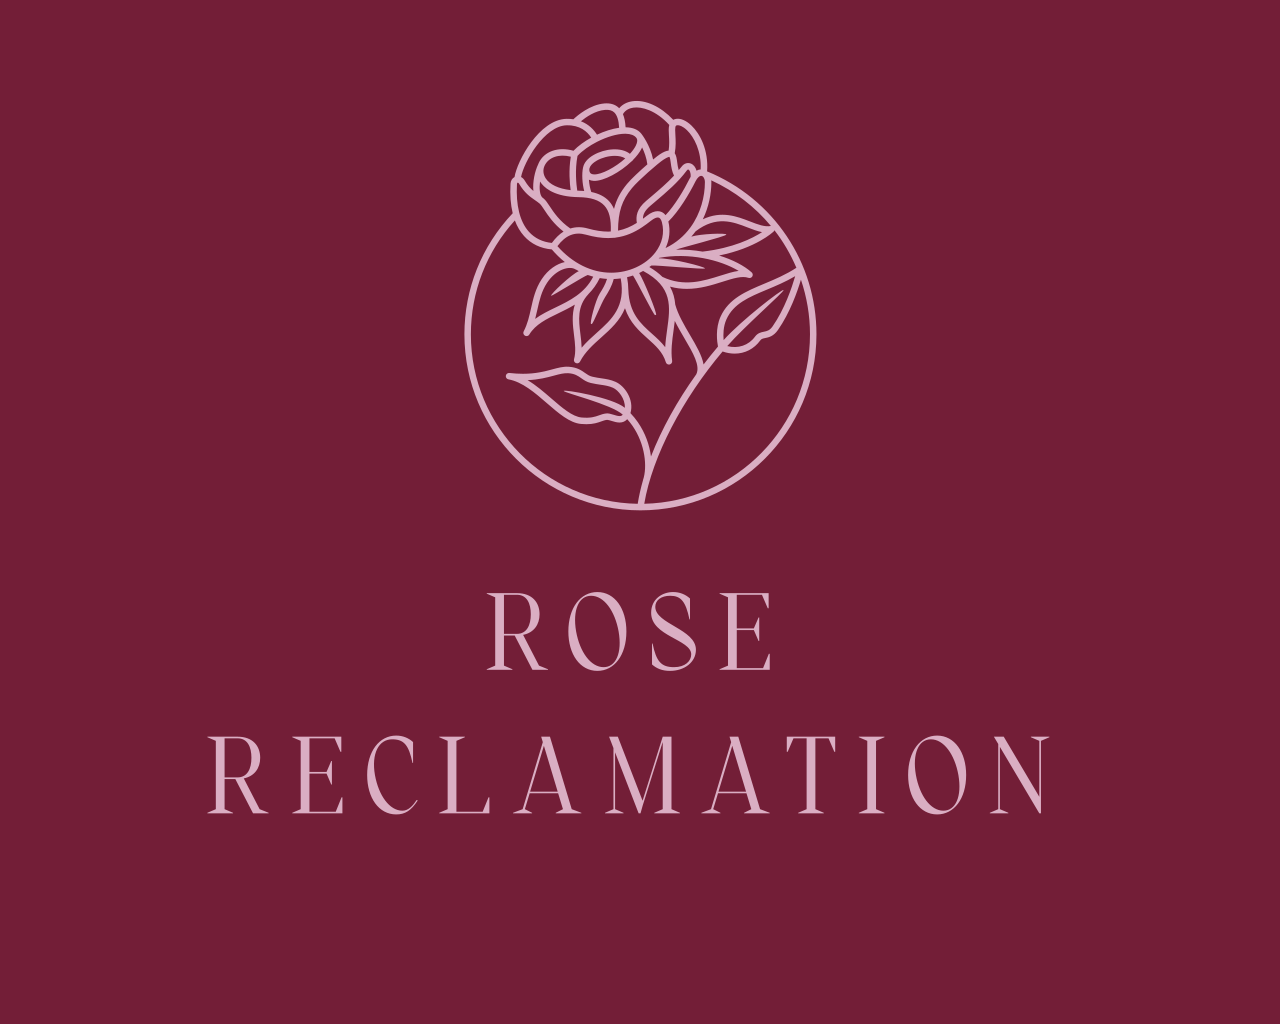 Rose Reclamation